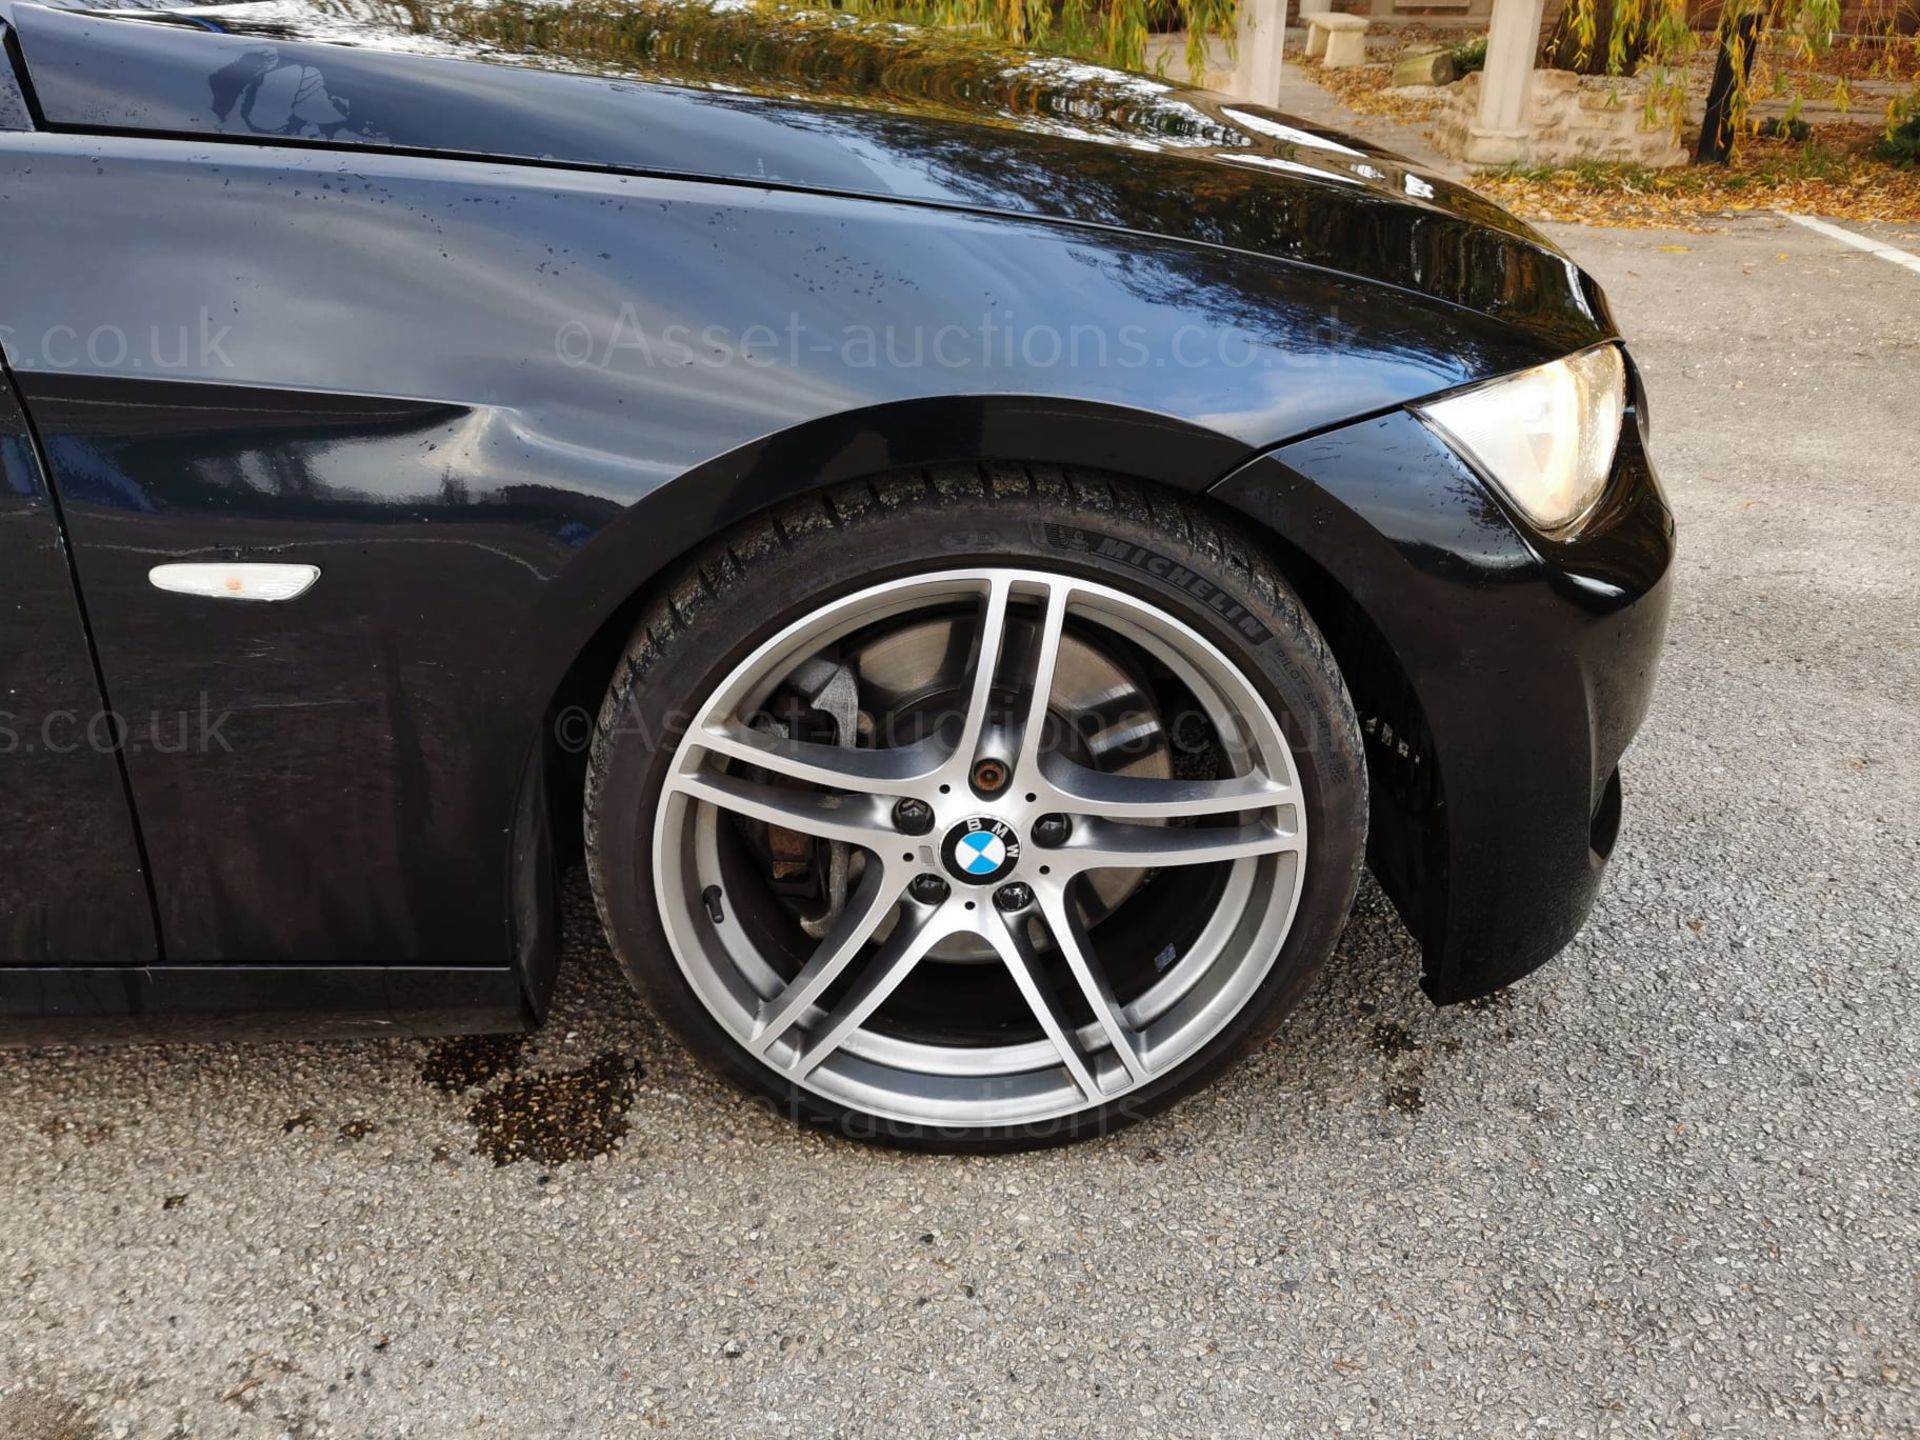 2012 BMW 335I SPORT PLUS EDITION BLACK COUPE, 164,779 MILES, 3.0 PETROL ENGINE *NO VAT* - Image 13 of 29